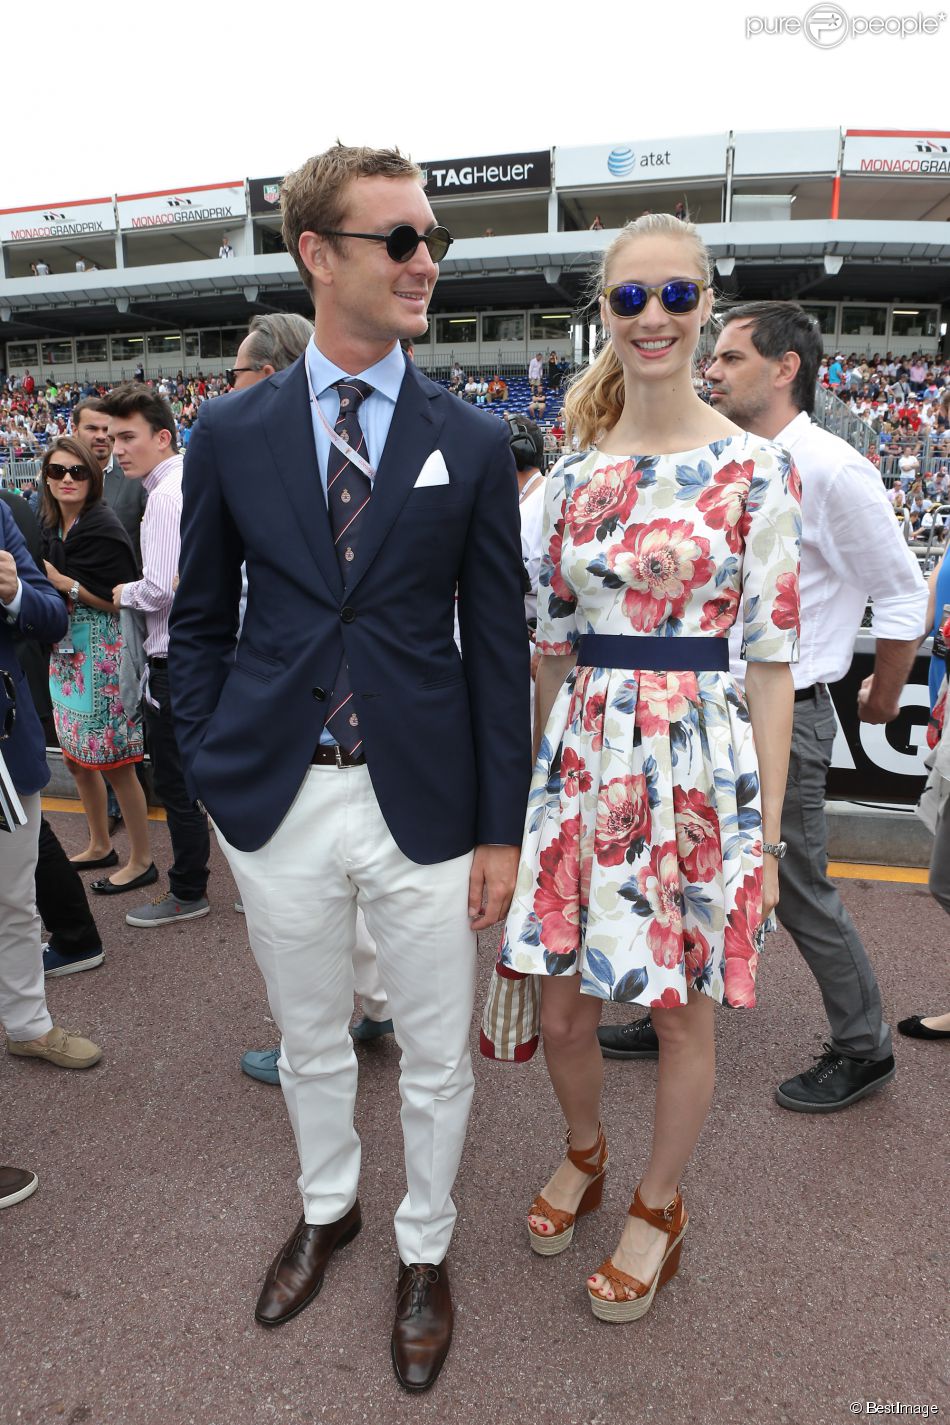  Pierre Casiraghi et sa compagne Beatrice Borromeo au Grand Prix de Formule 1 de Monaco, le 25 mai 2014.  